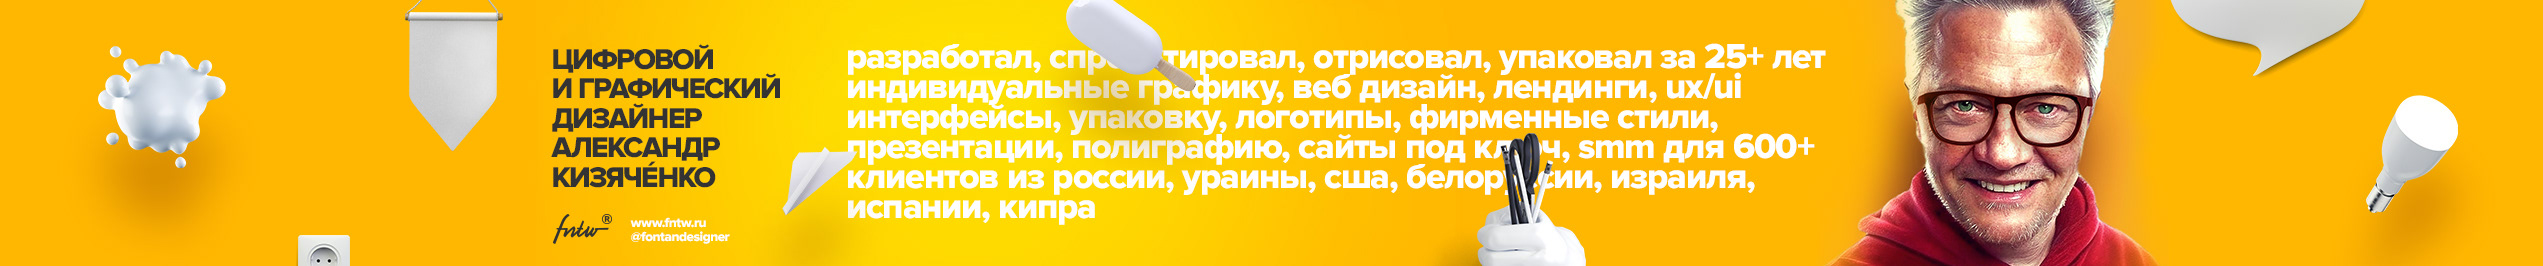 Baner profilu użytkownika Alexander Kizyachenko